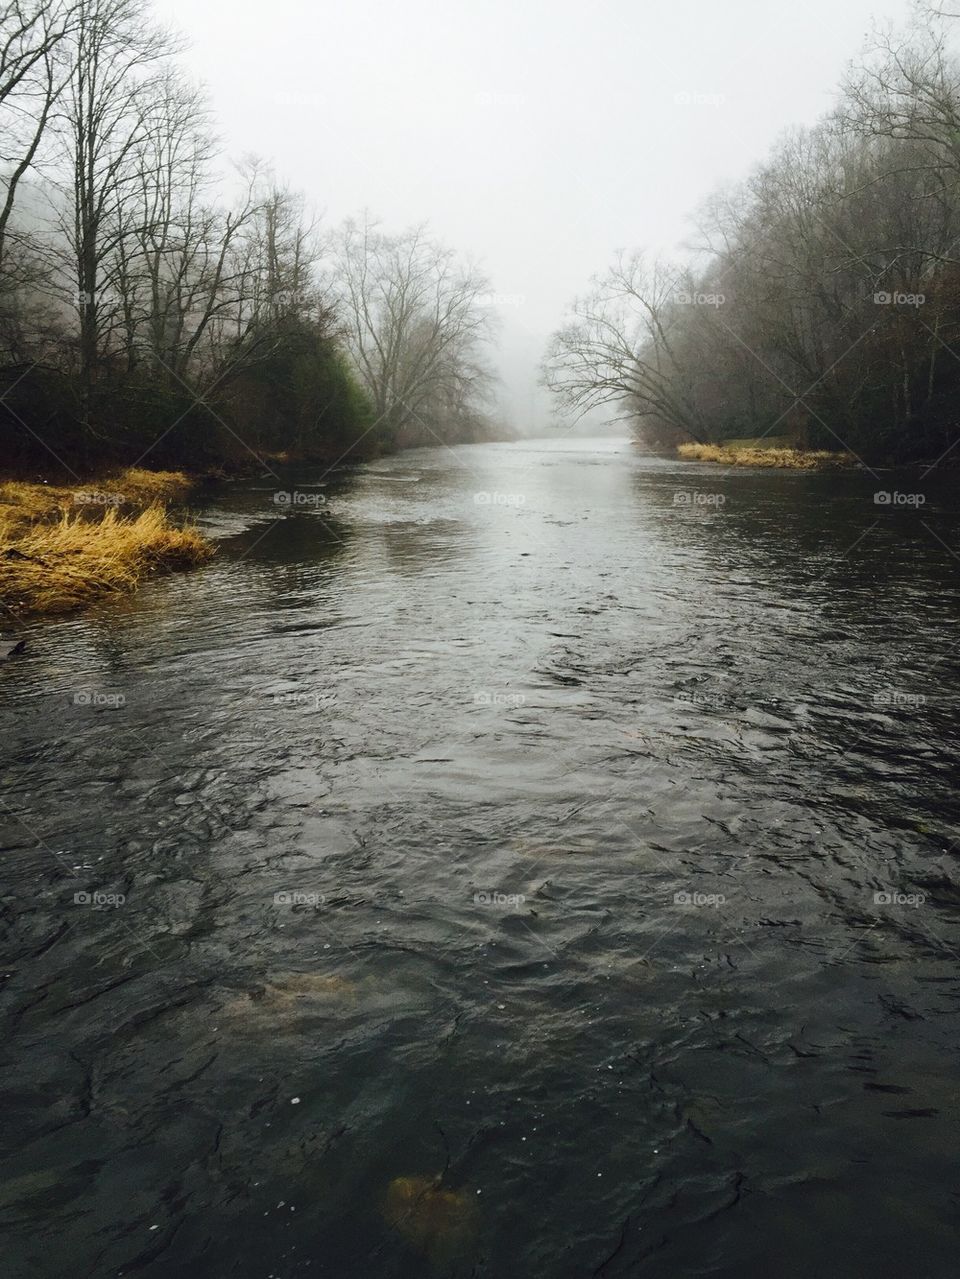 "Morning"

New River, NC